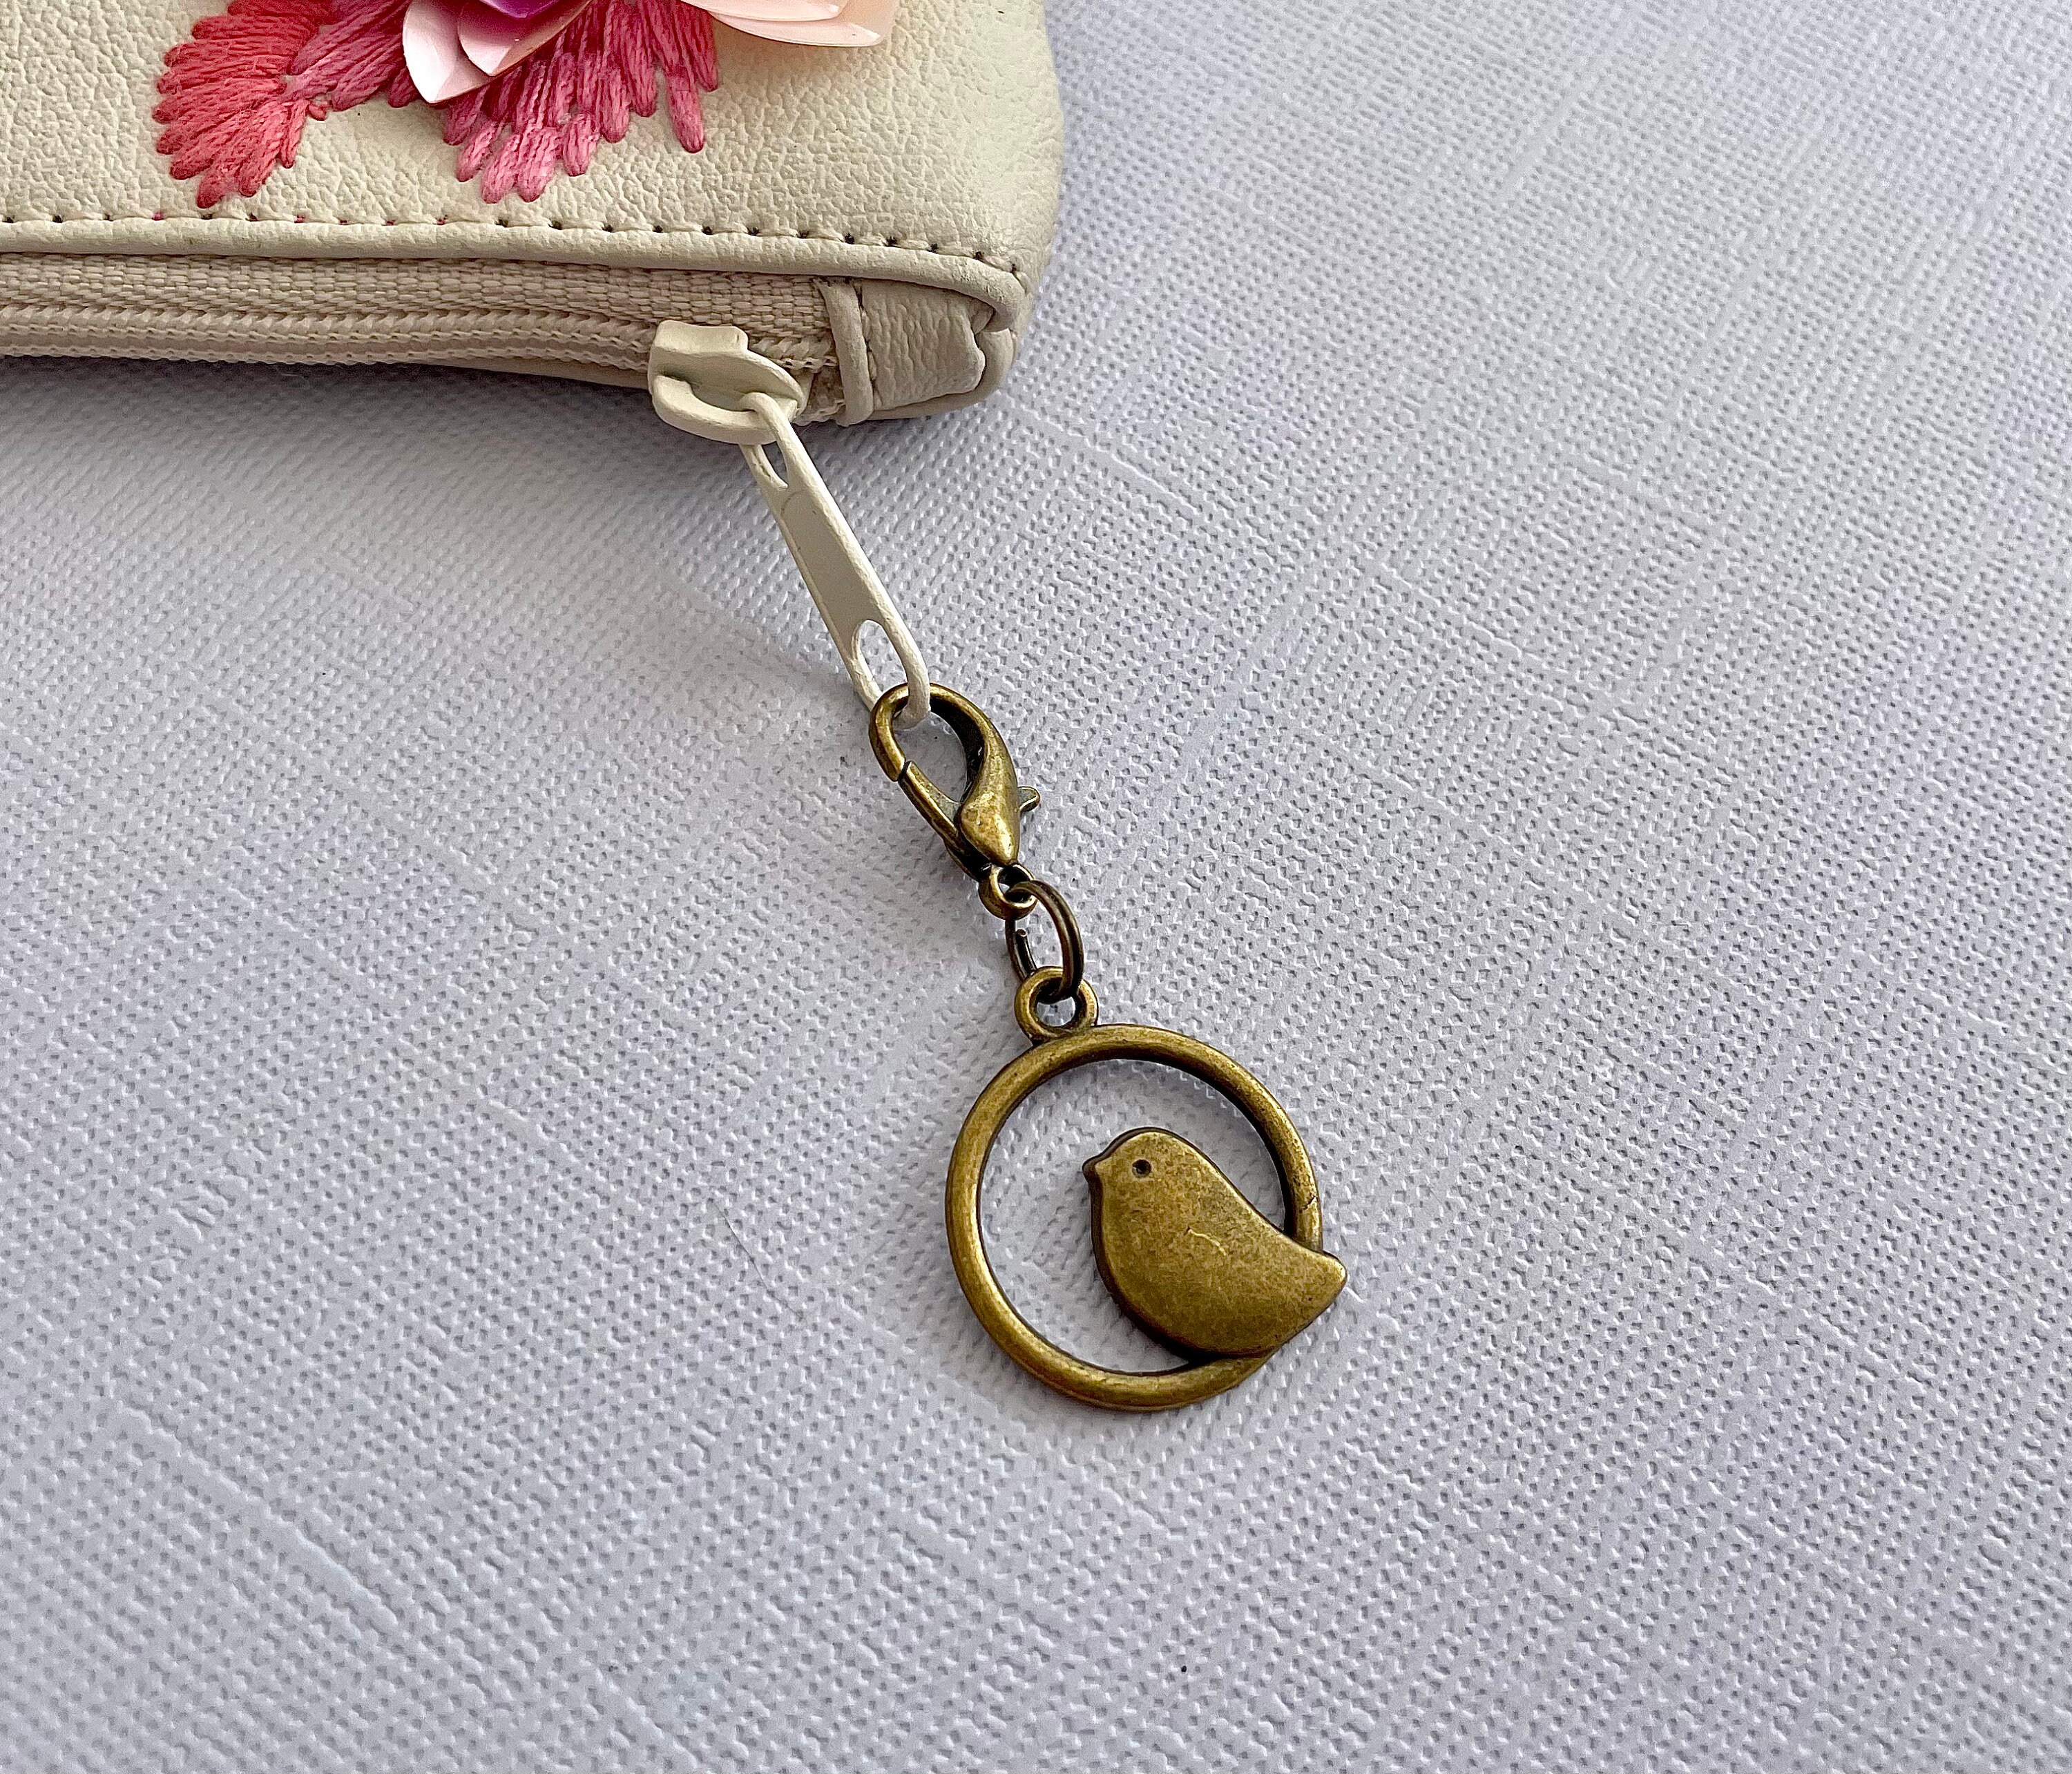 Bird Zipper Pull Charm - Decorative Zipper Sewing Supply Accessory for Zipper Purse Bag (Ancient Bronze Birdcage, 2x2.4cm)